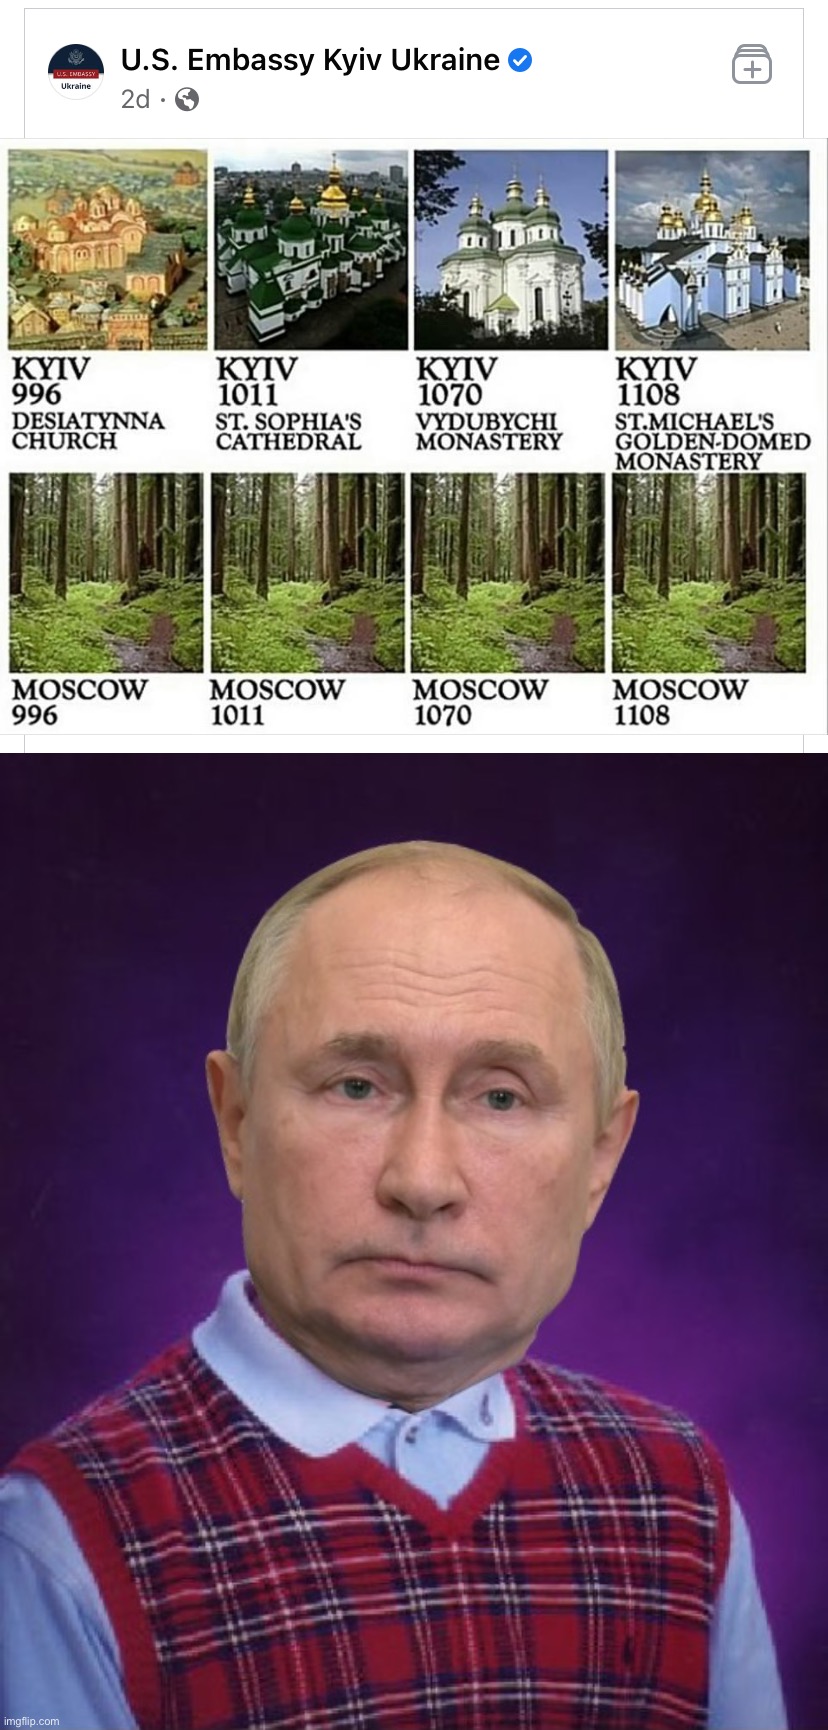 Things that make you go hmmm | image tagged in u s embassy kiev ukraine,bad luck putin,putin,russia,ukraine,historical meme | made w/ Imgflip meme maker